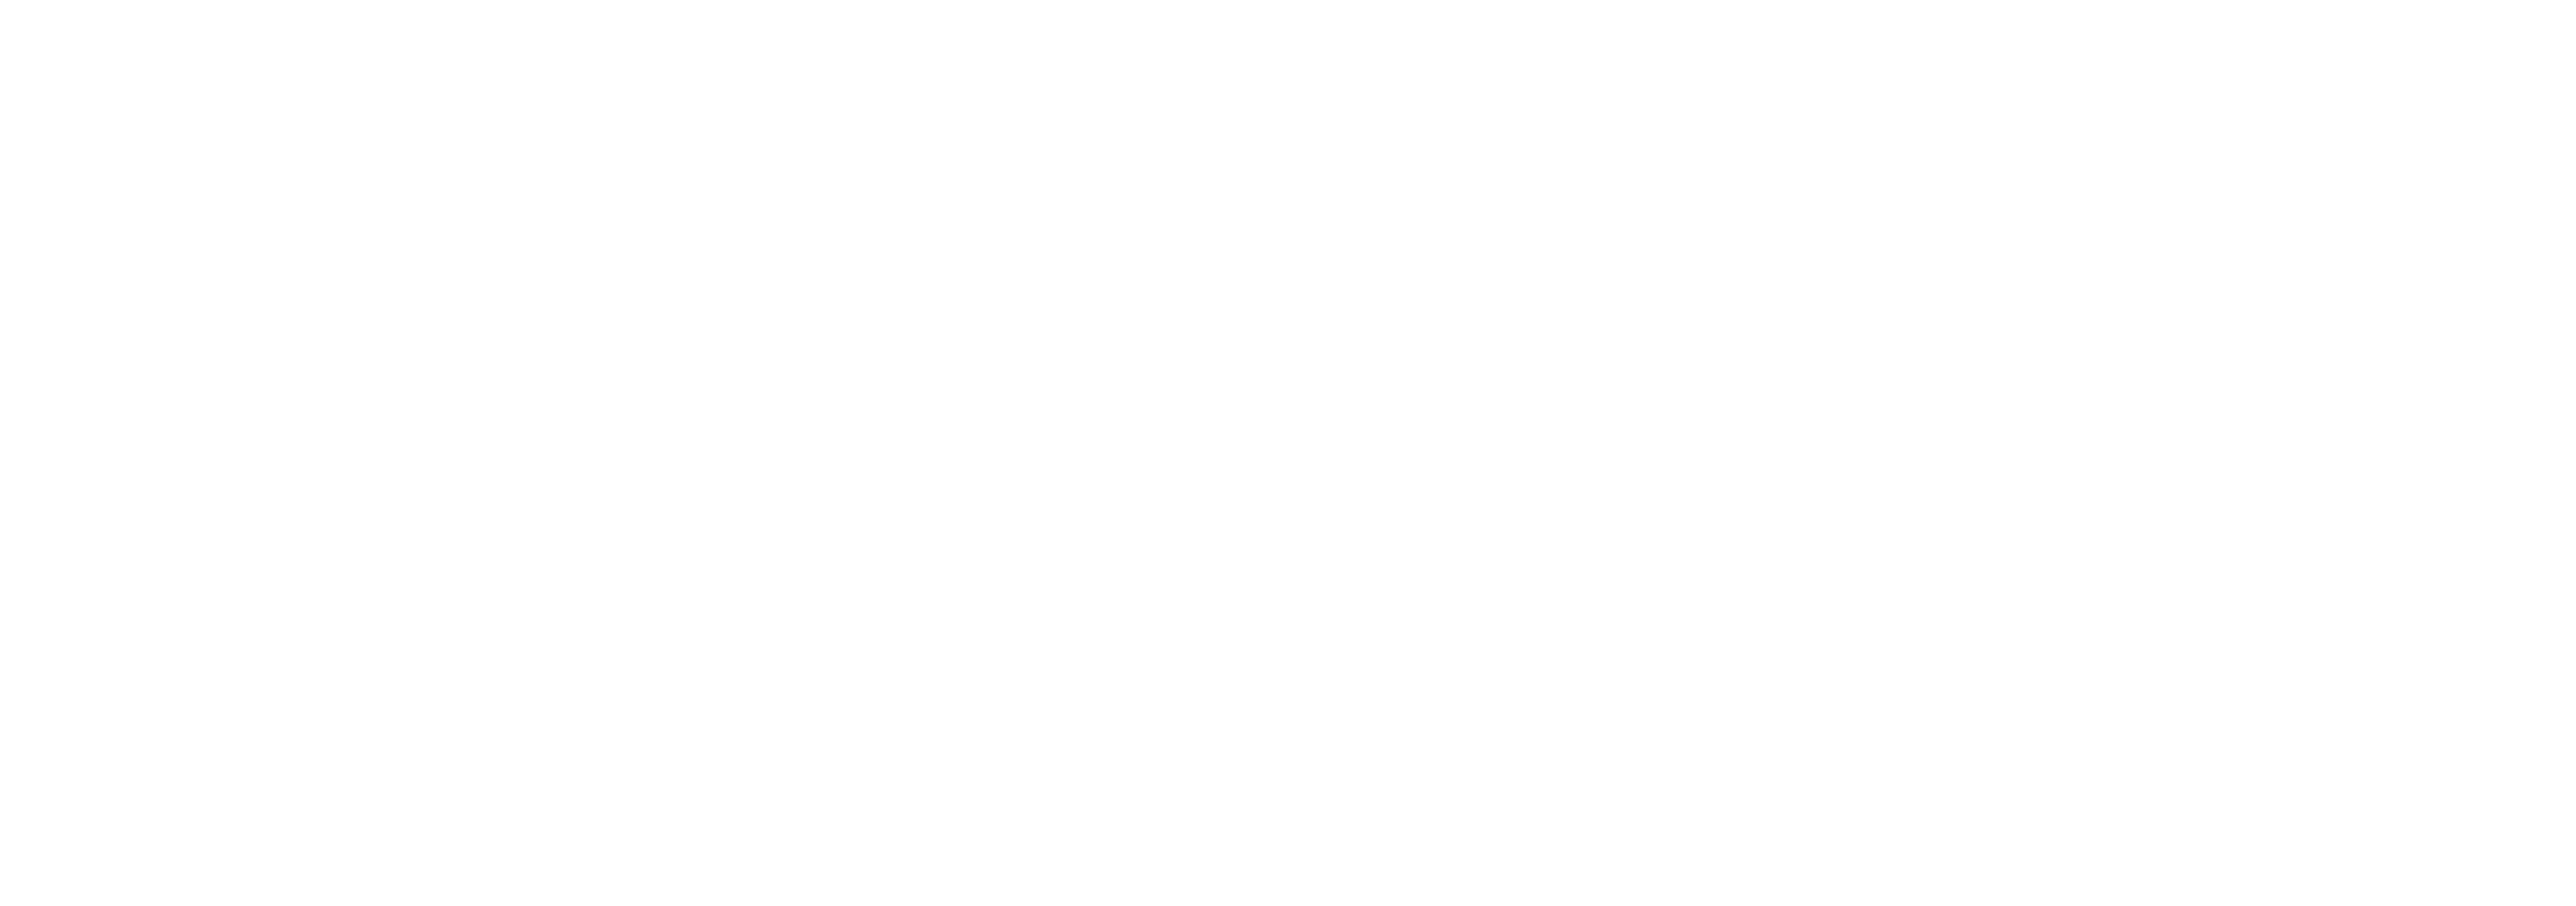 liftoff-logo-WHITE